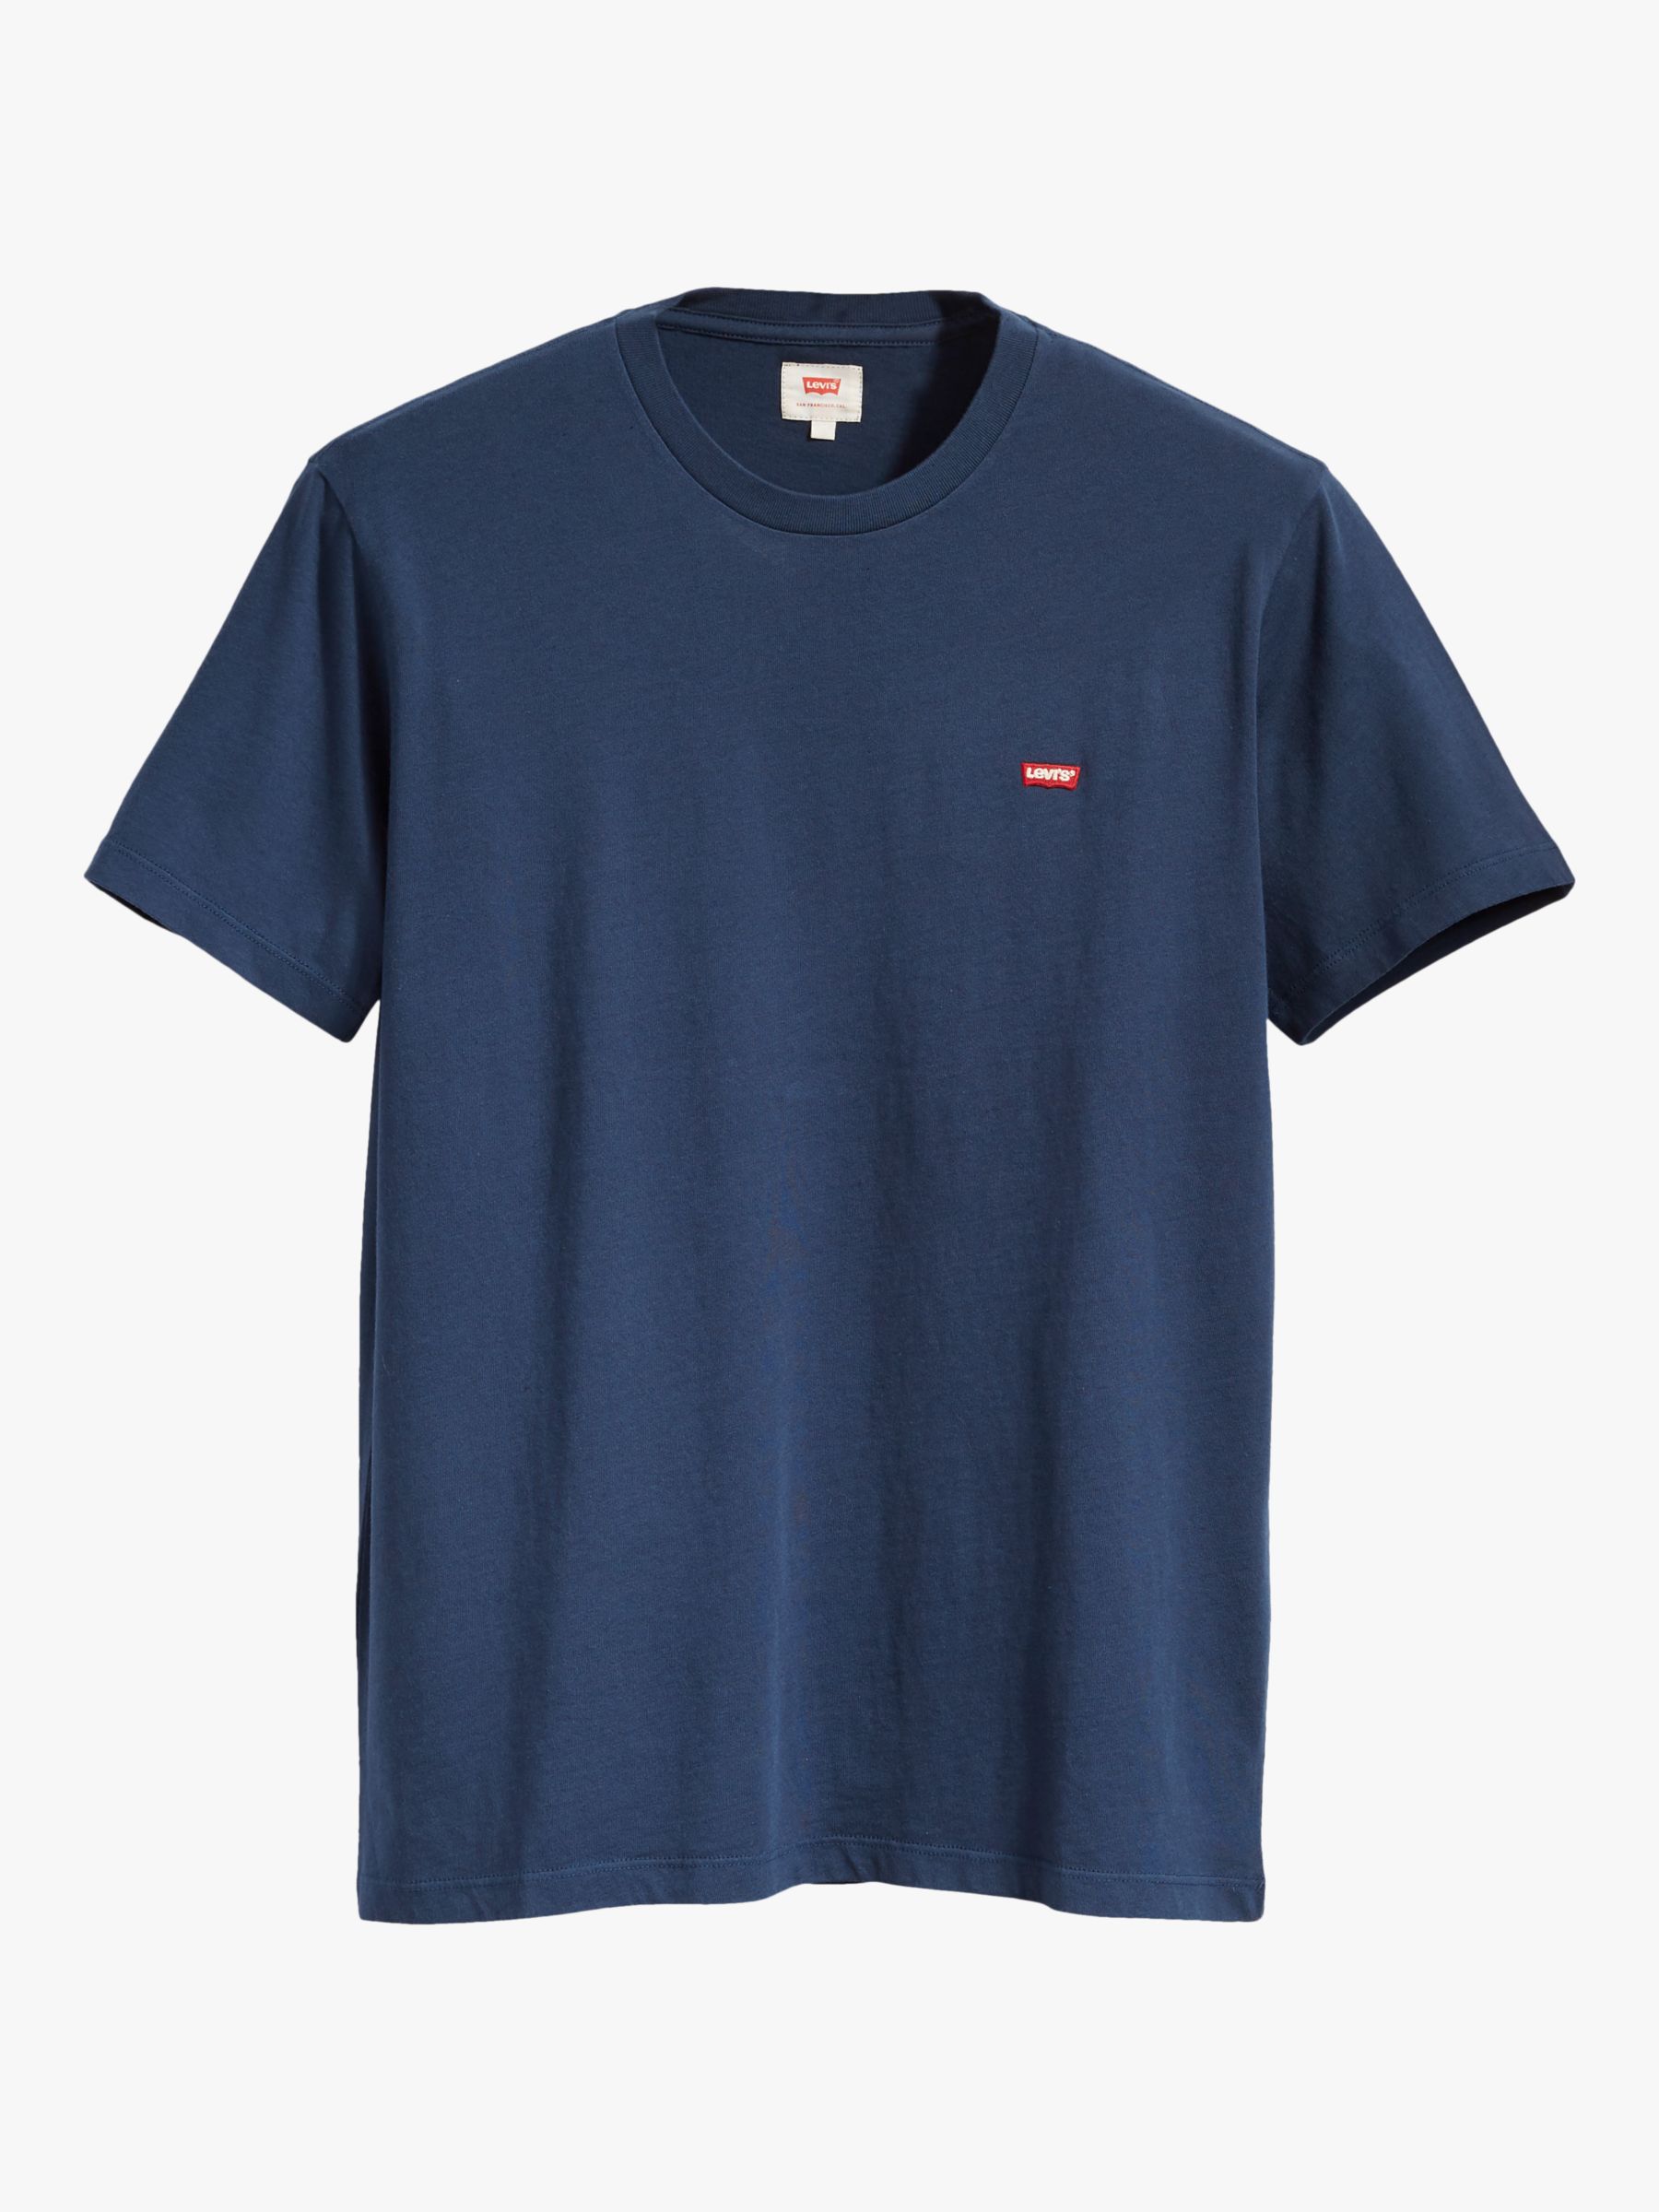 Levi's Original T-Shirt, Blue, S